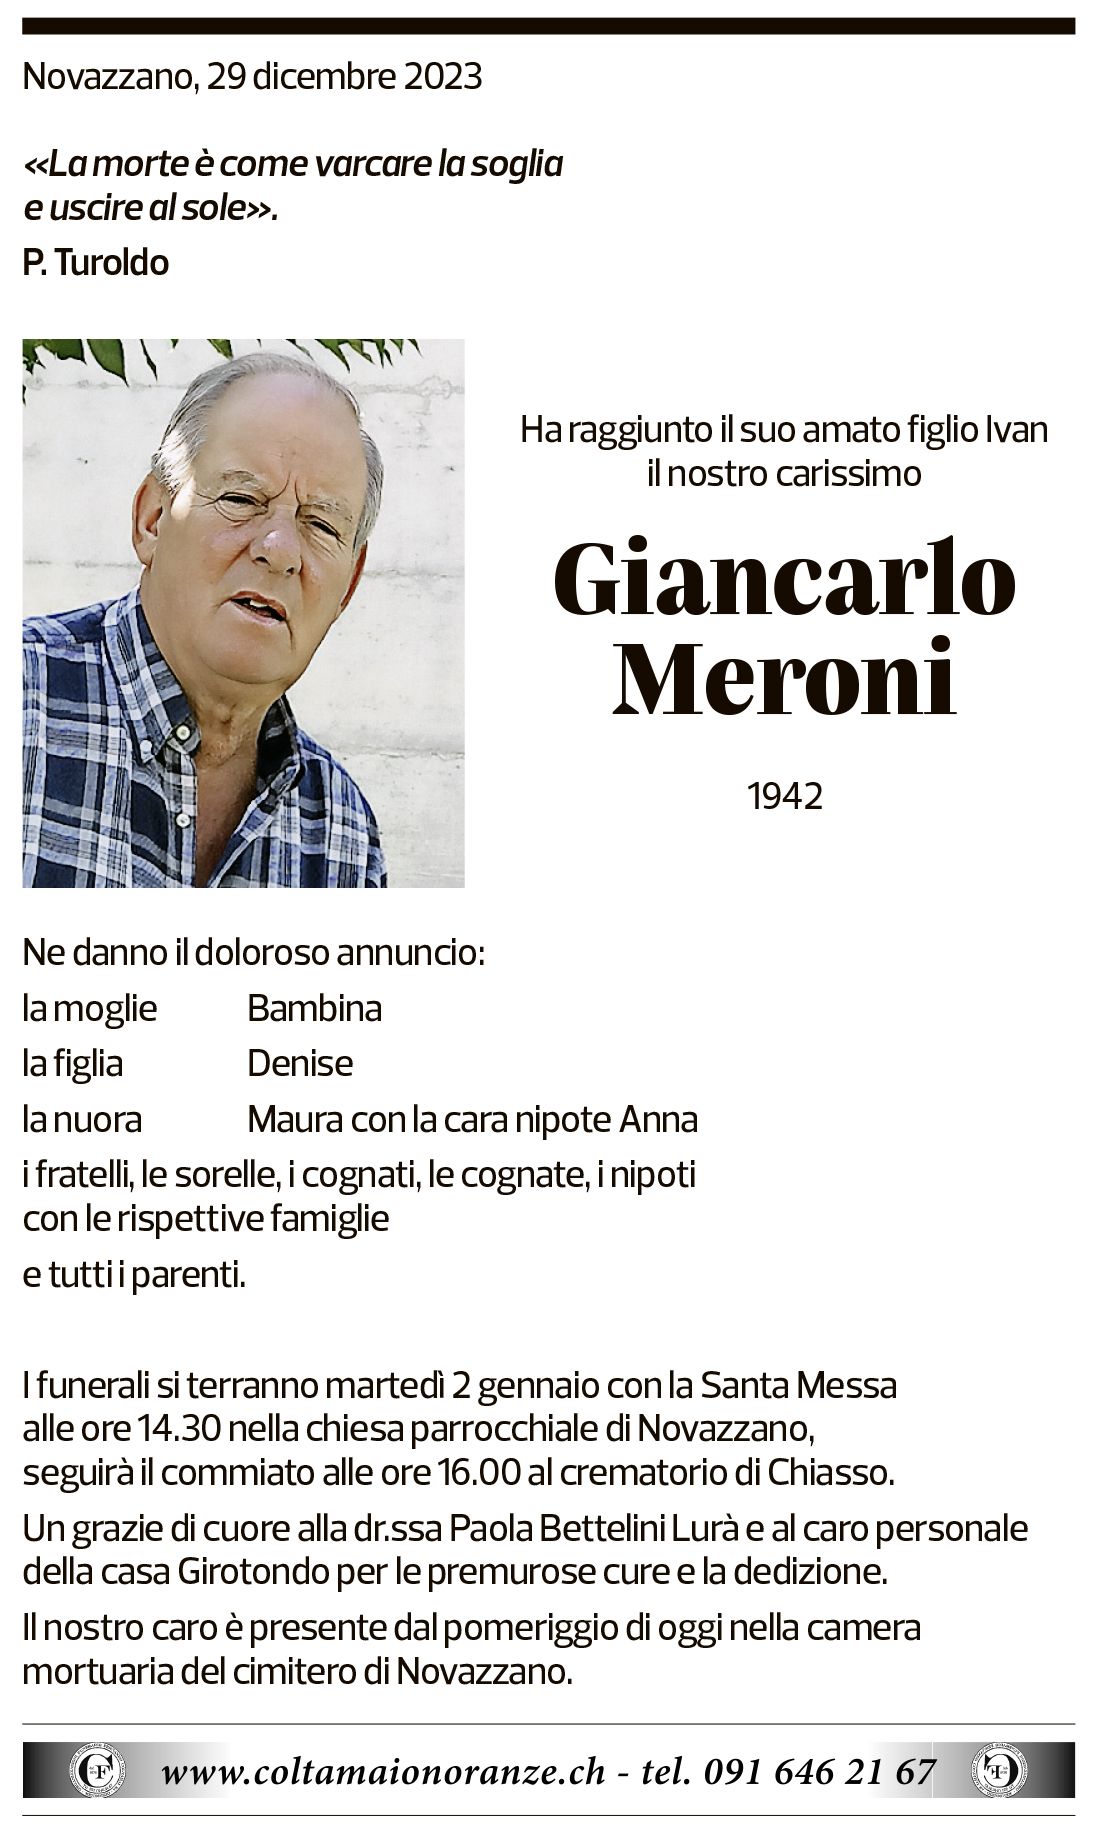 Annuncio funebre Giancarlo Meroni